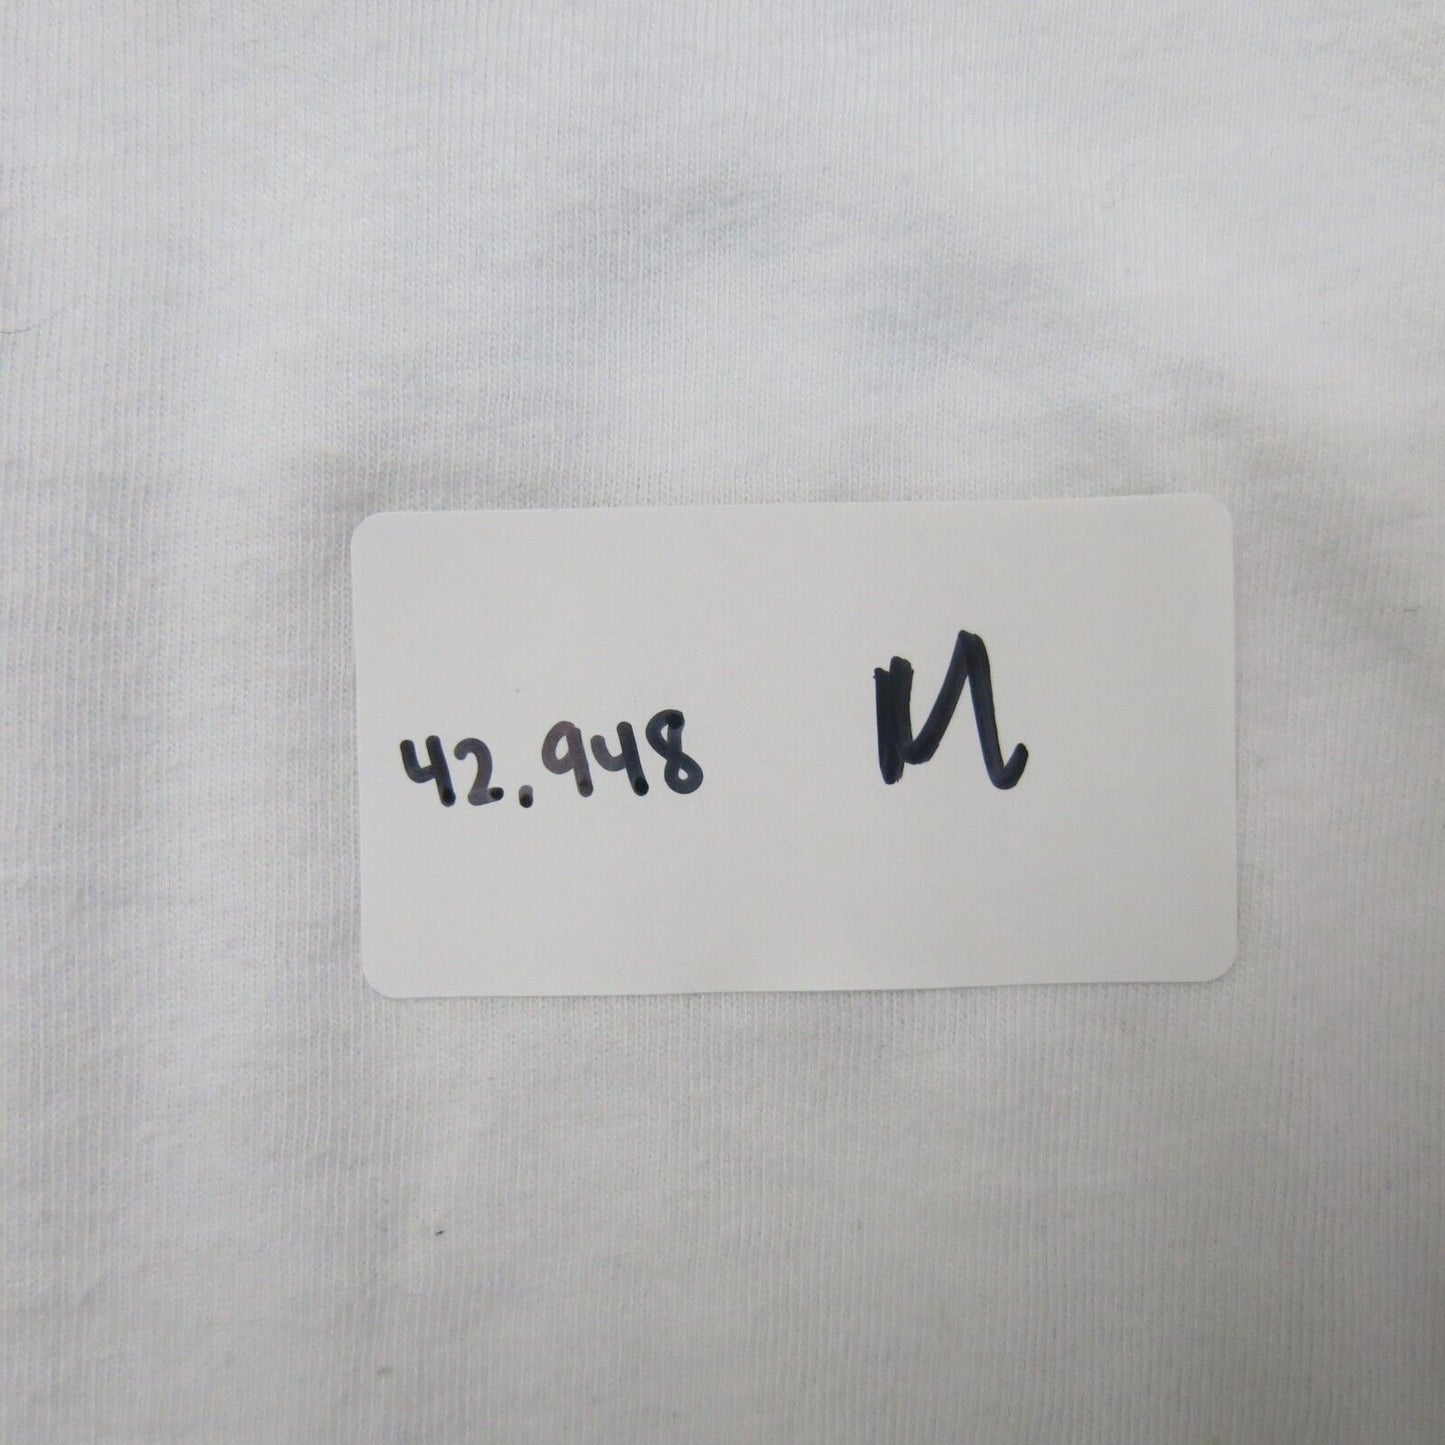 Tommy Hilfiger Mens Crew Neck T Shirt Short Sleeves 100% Cotton Off White SZ L/G